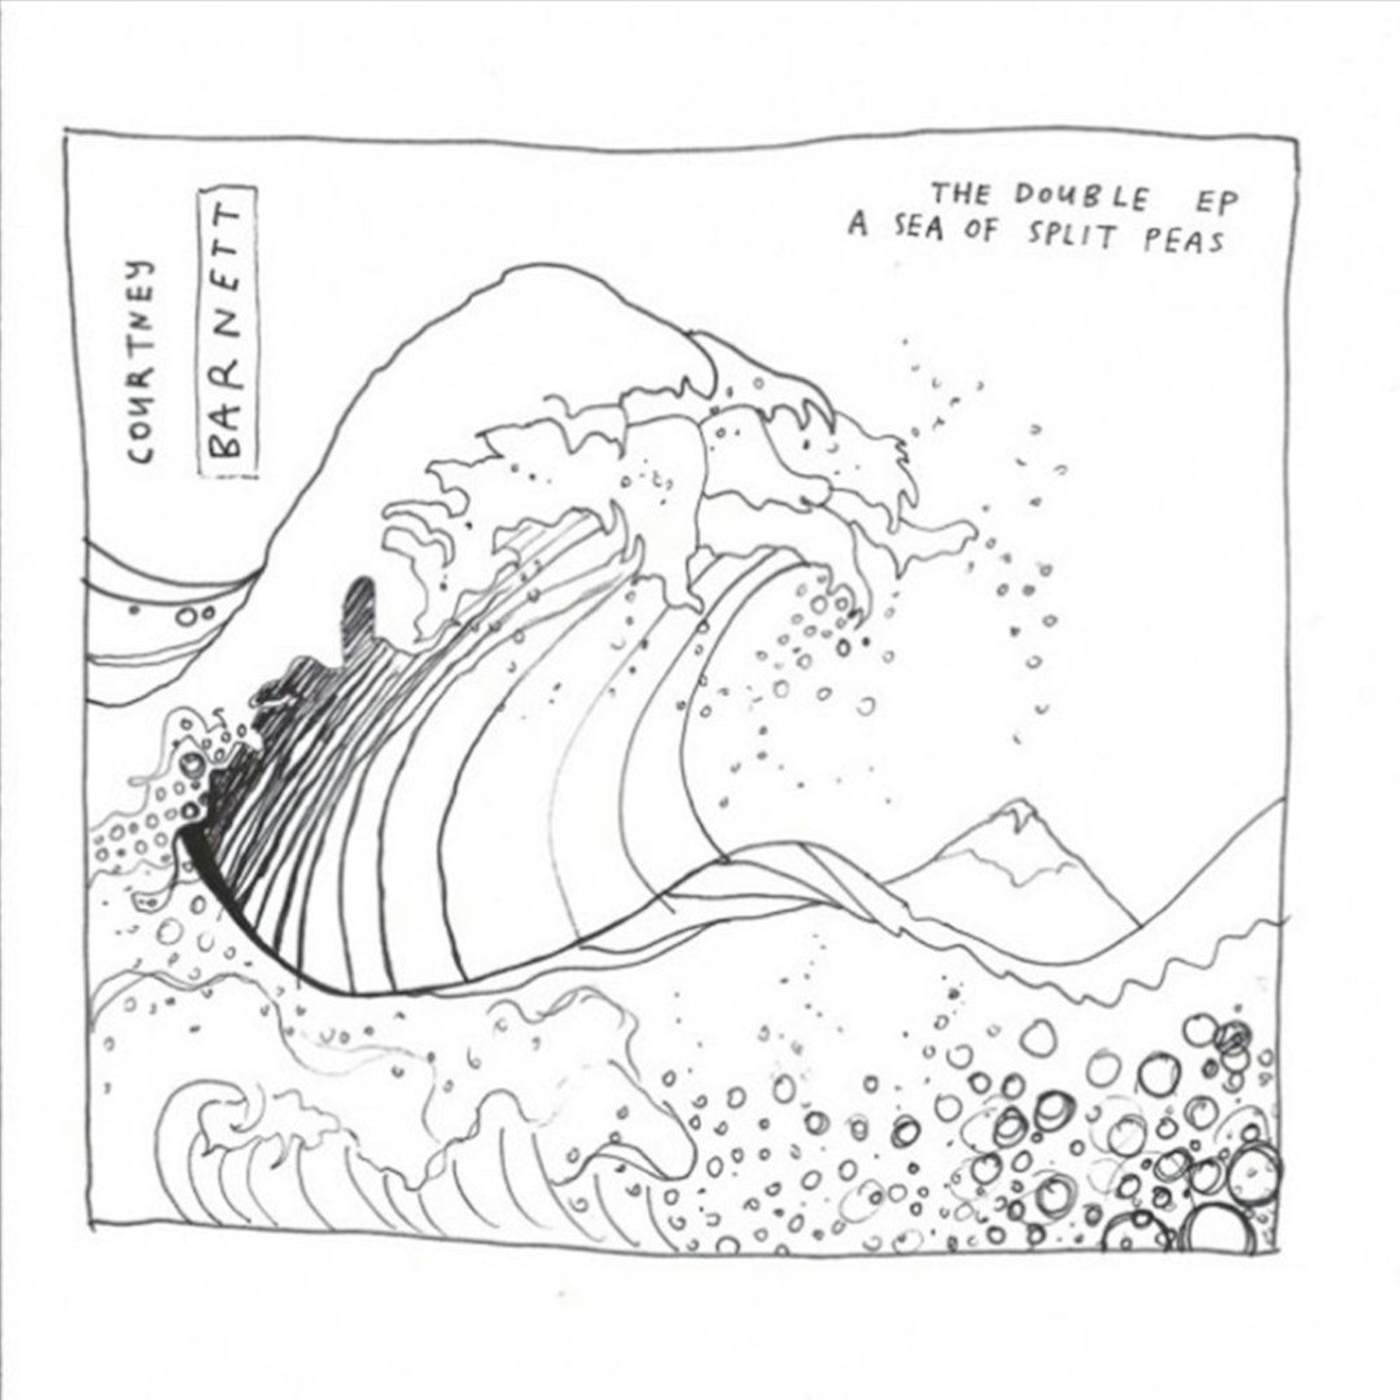 Courtney Barnett DOUBLE EP: A SEA OF SPLIT PEAS Vinyl Record